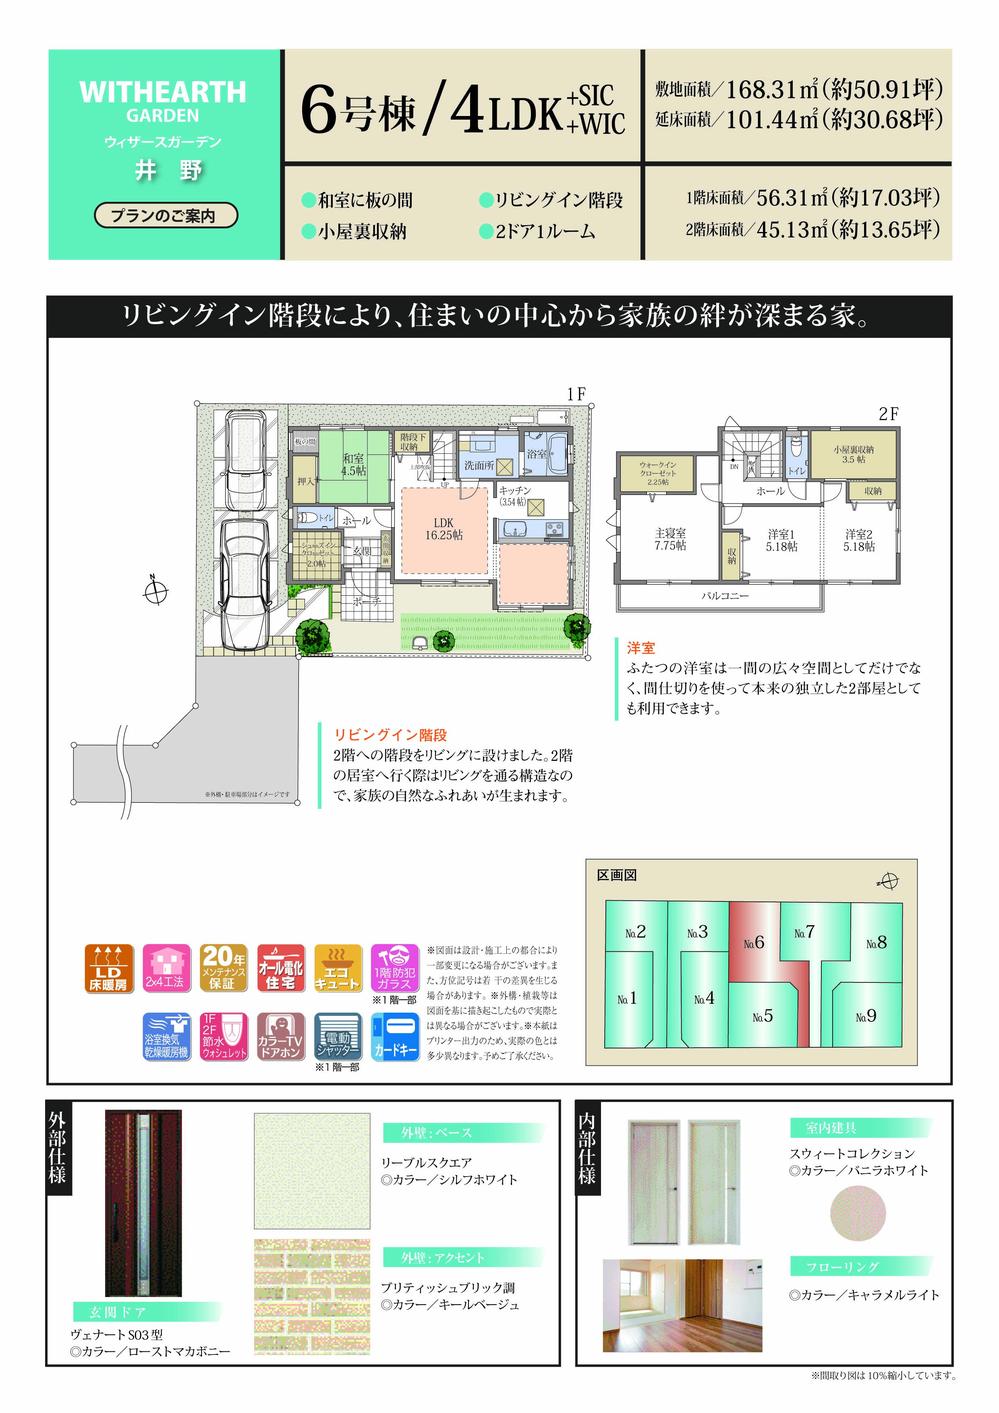 Floor plan. (6 Building), Price 30,600,000 yen, 4LDK, Land area 125.47 sq m , Building area 101.44 sq m